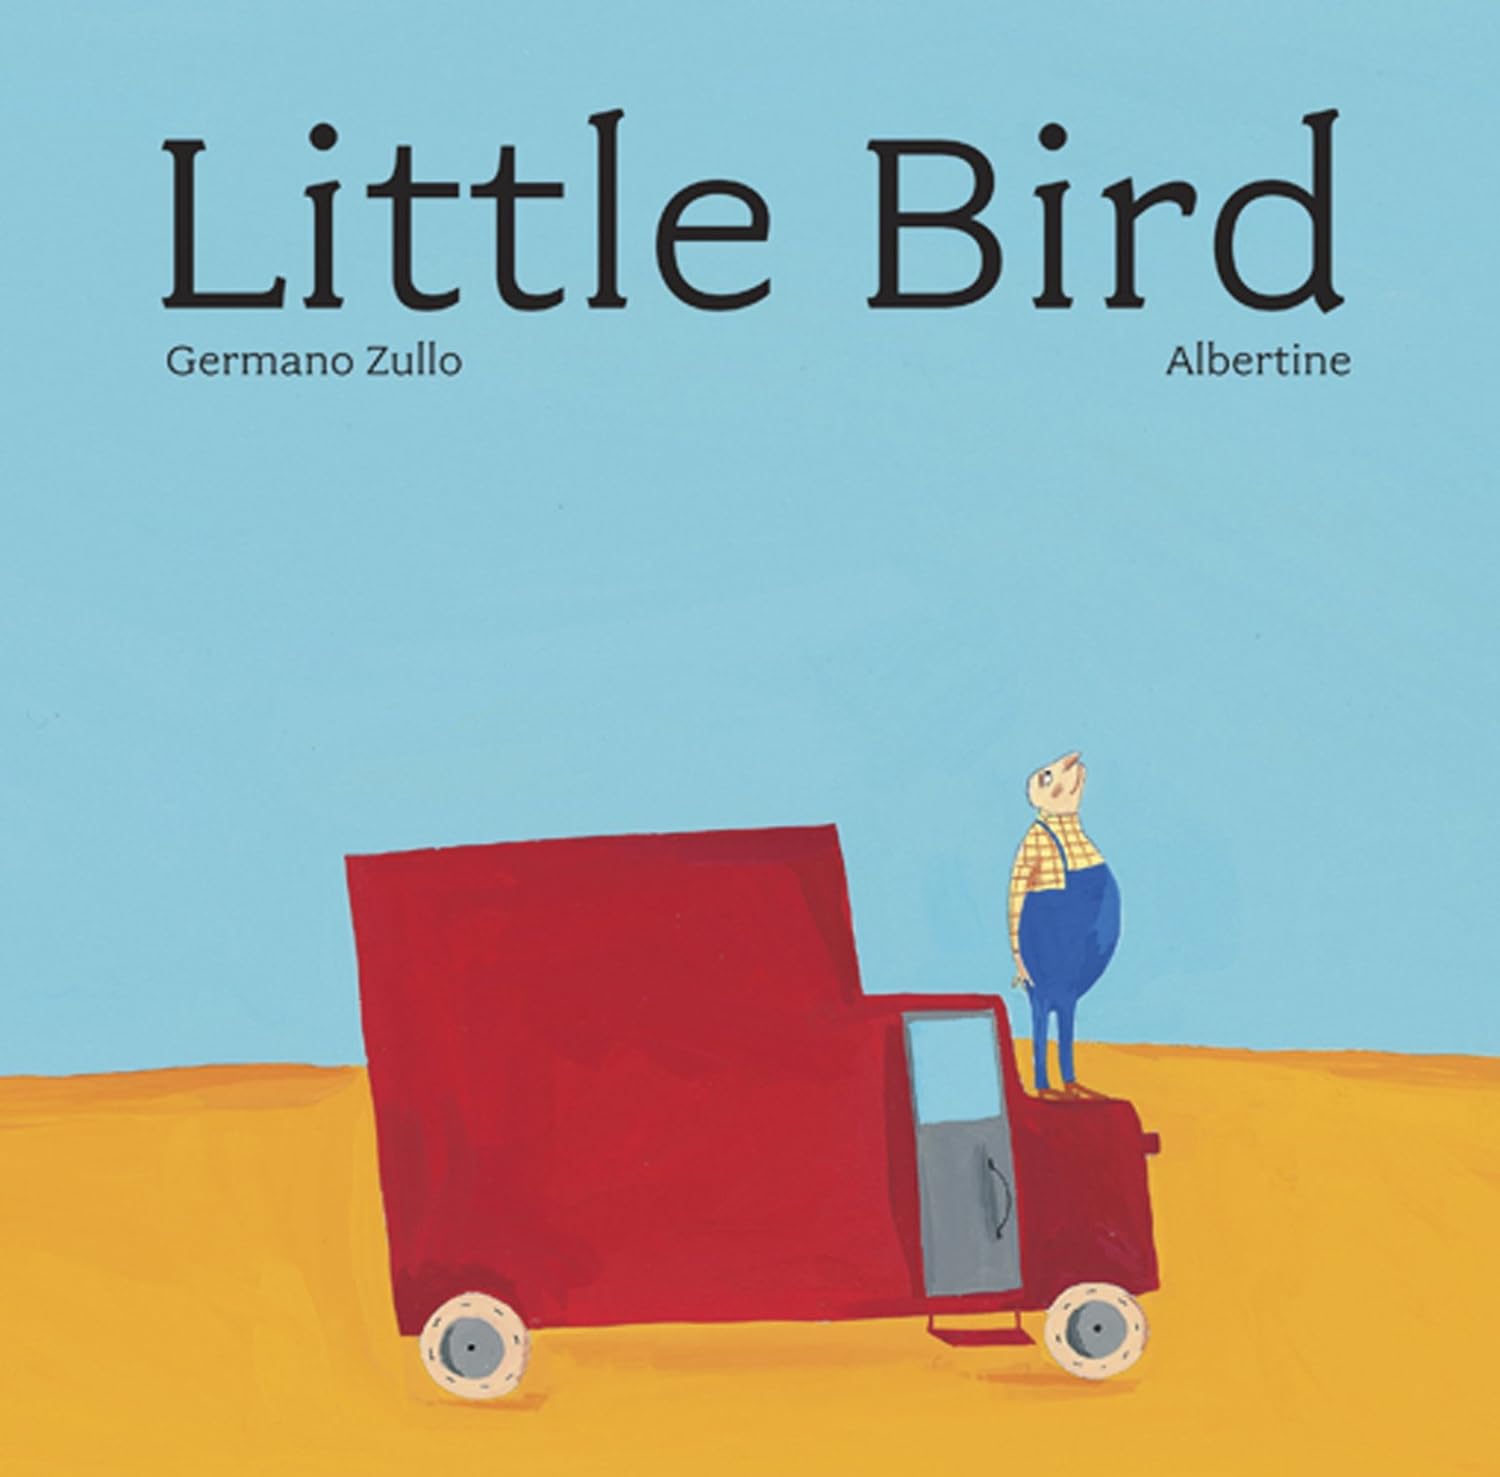 Little Bird - Joy